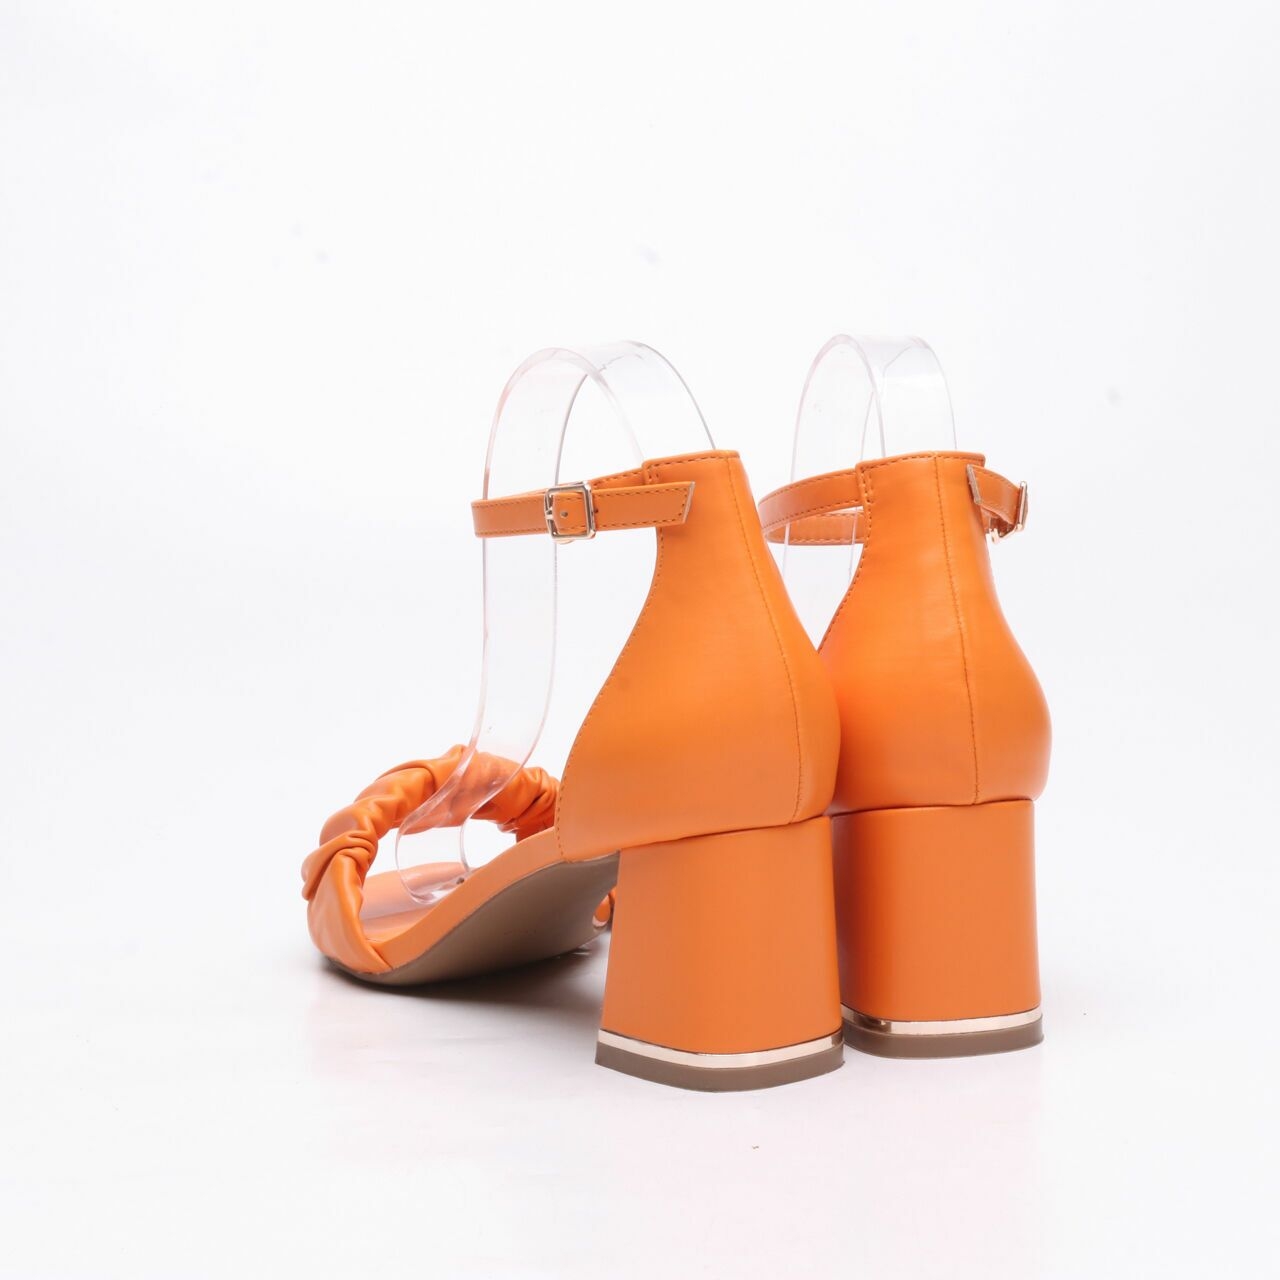 Urban & Co Orange Heels